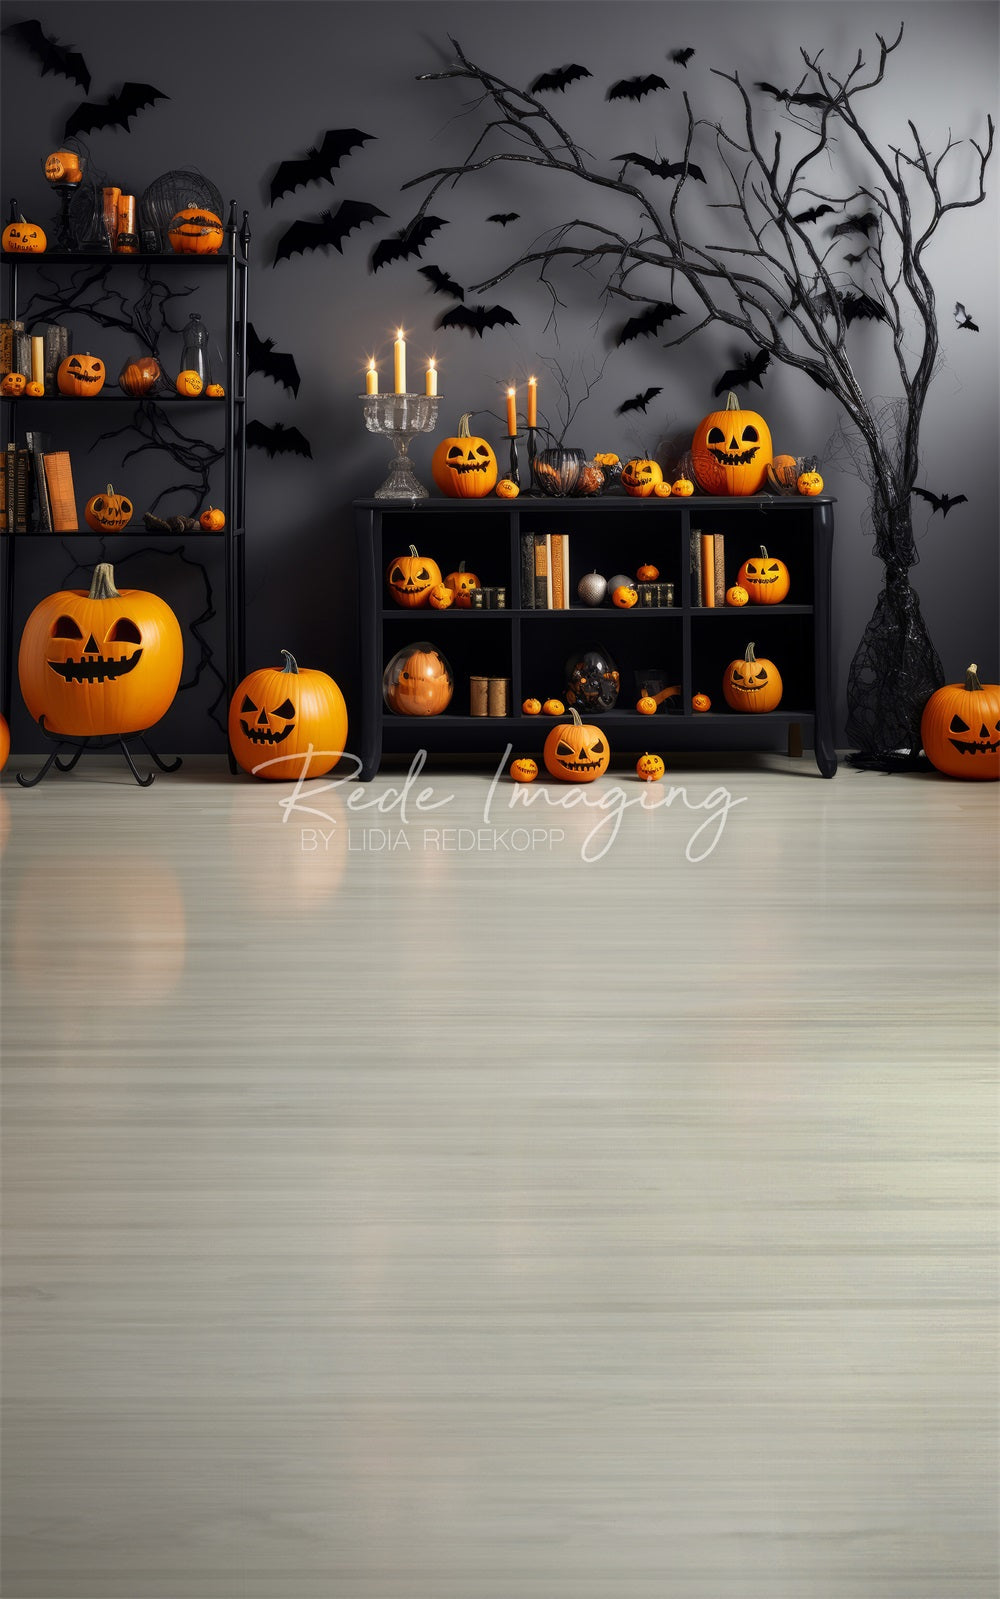 Kate Sweep Spooky Halloween Wall Backdrop Designed by Lidia Redekopp